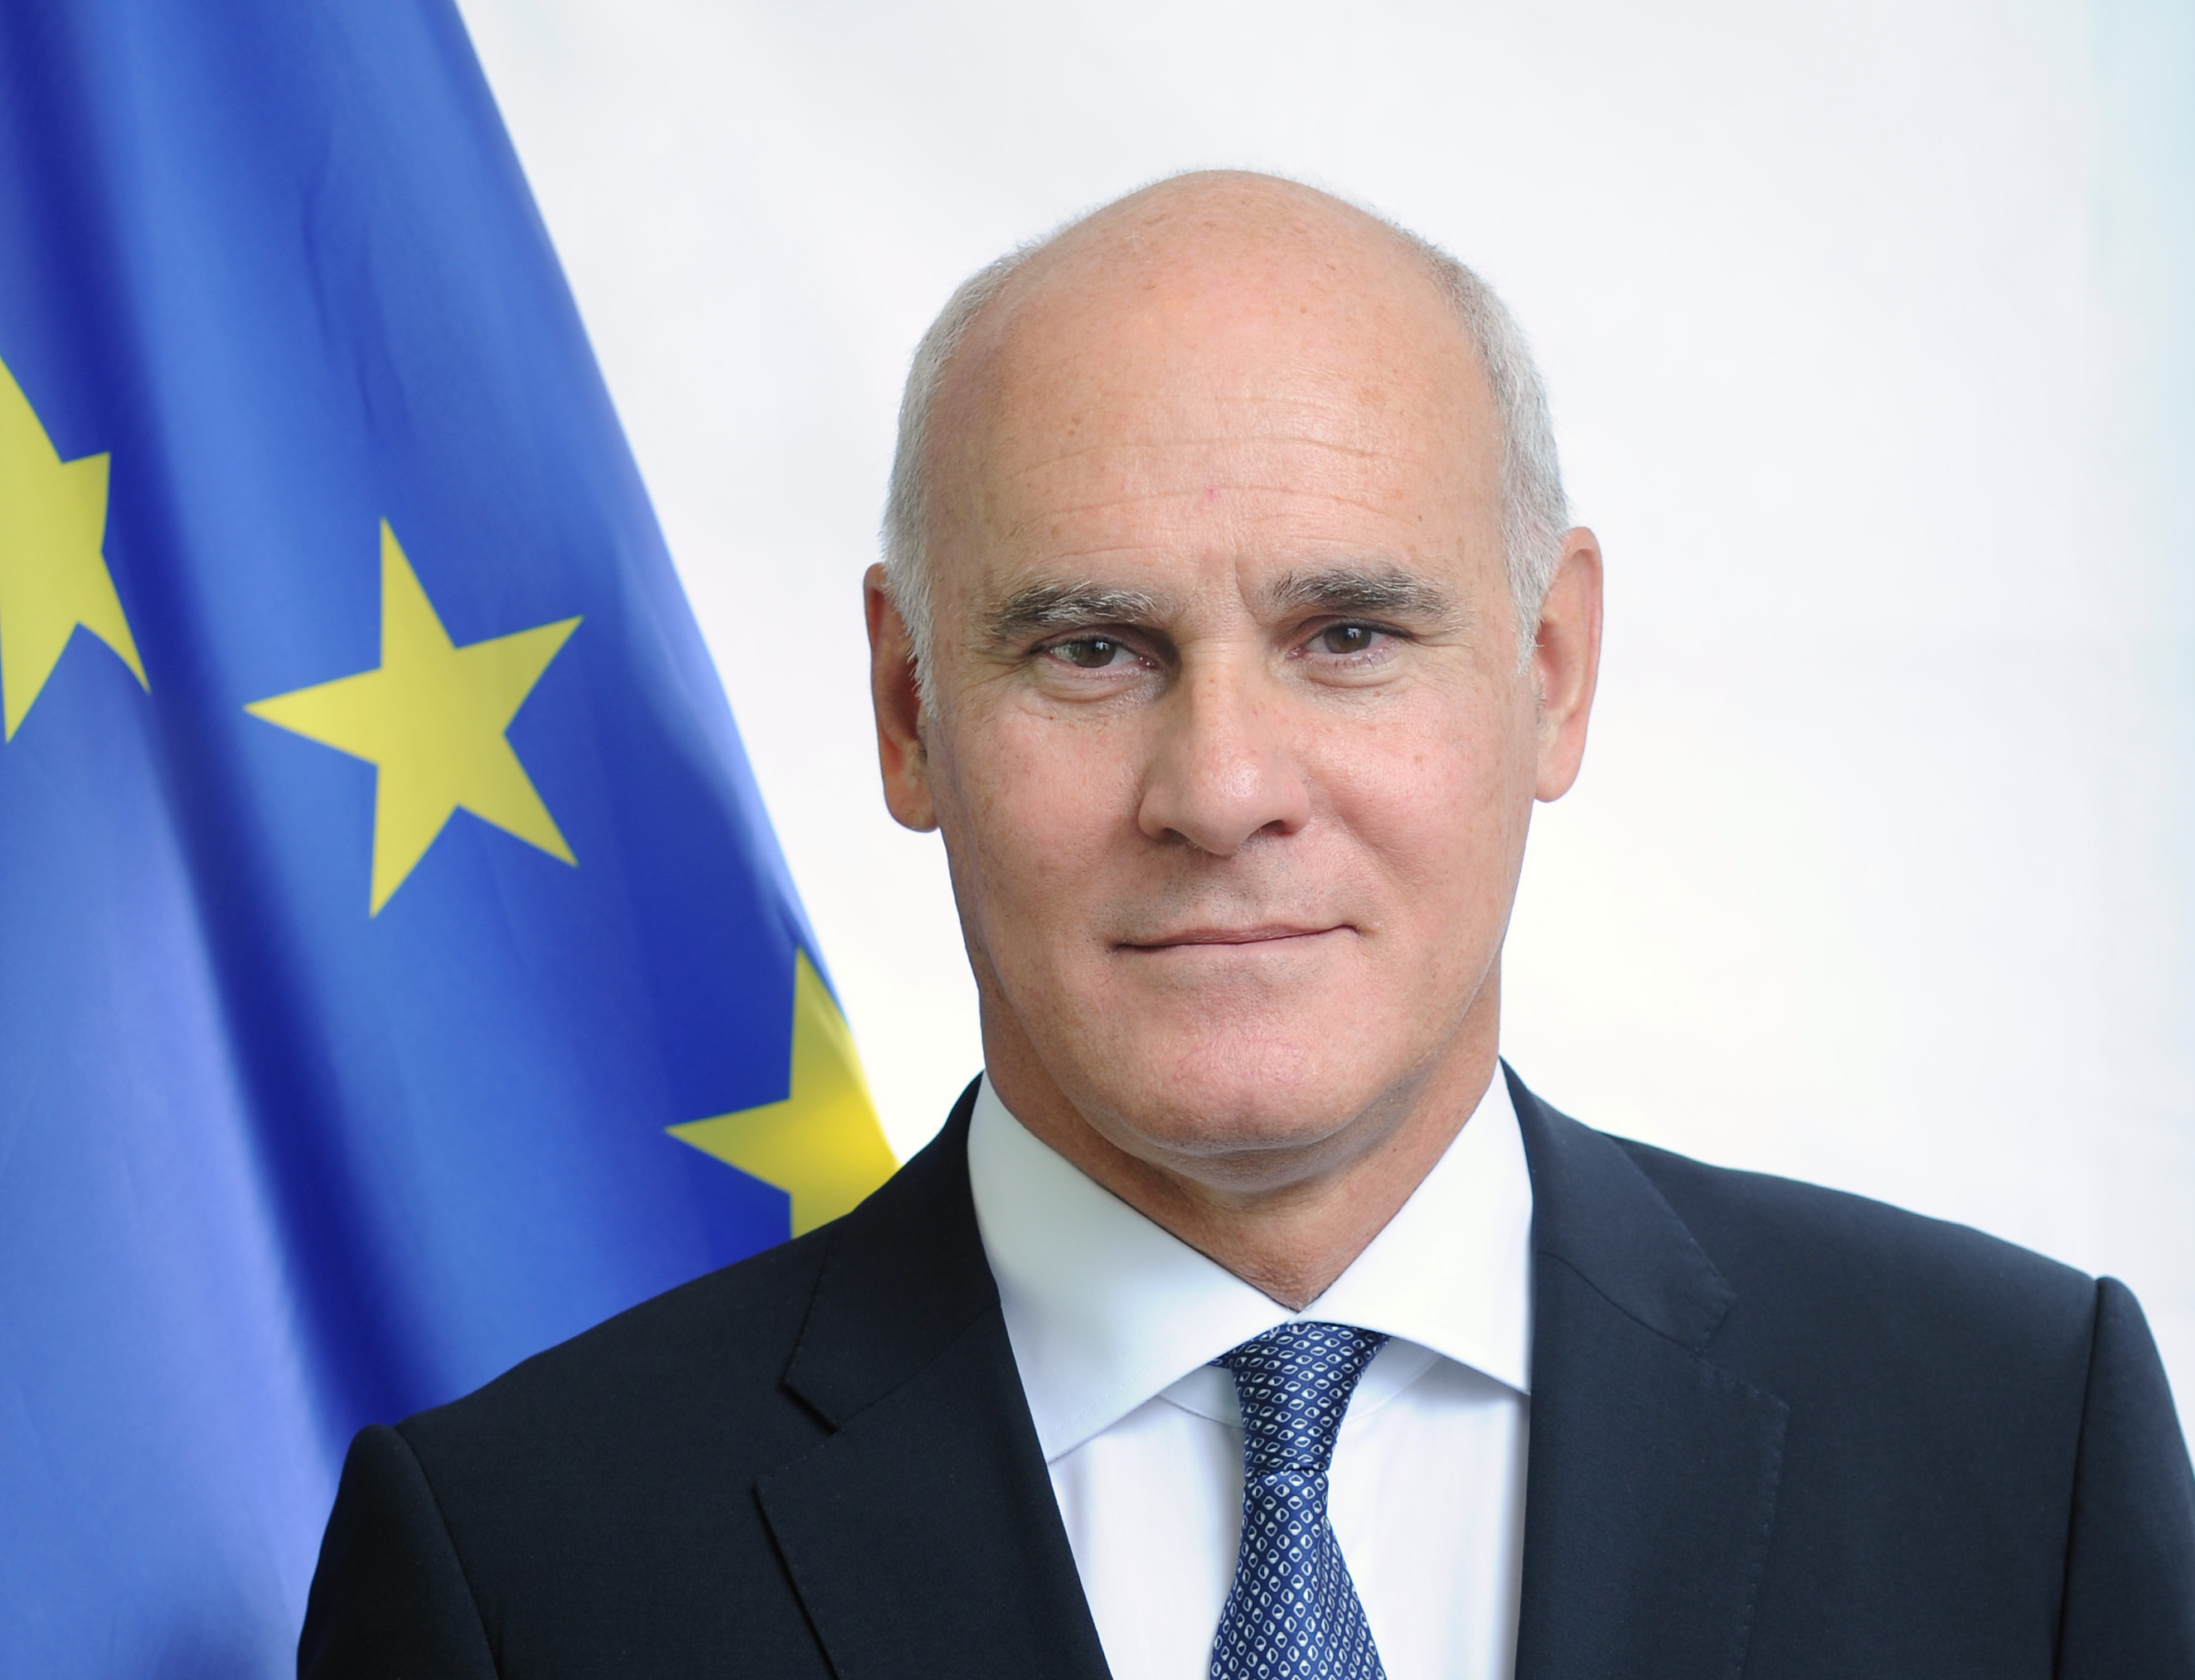 EU says ready to restart talks on N.Ireland protocol, envoy says